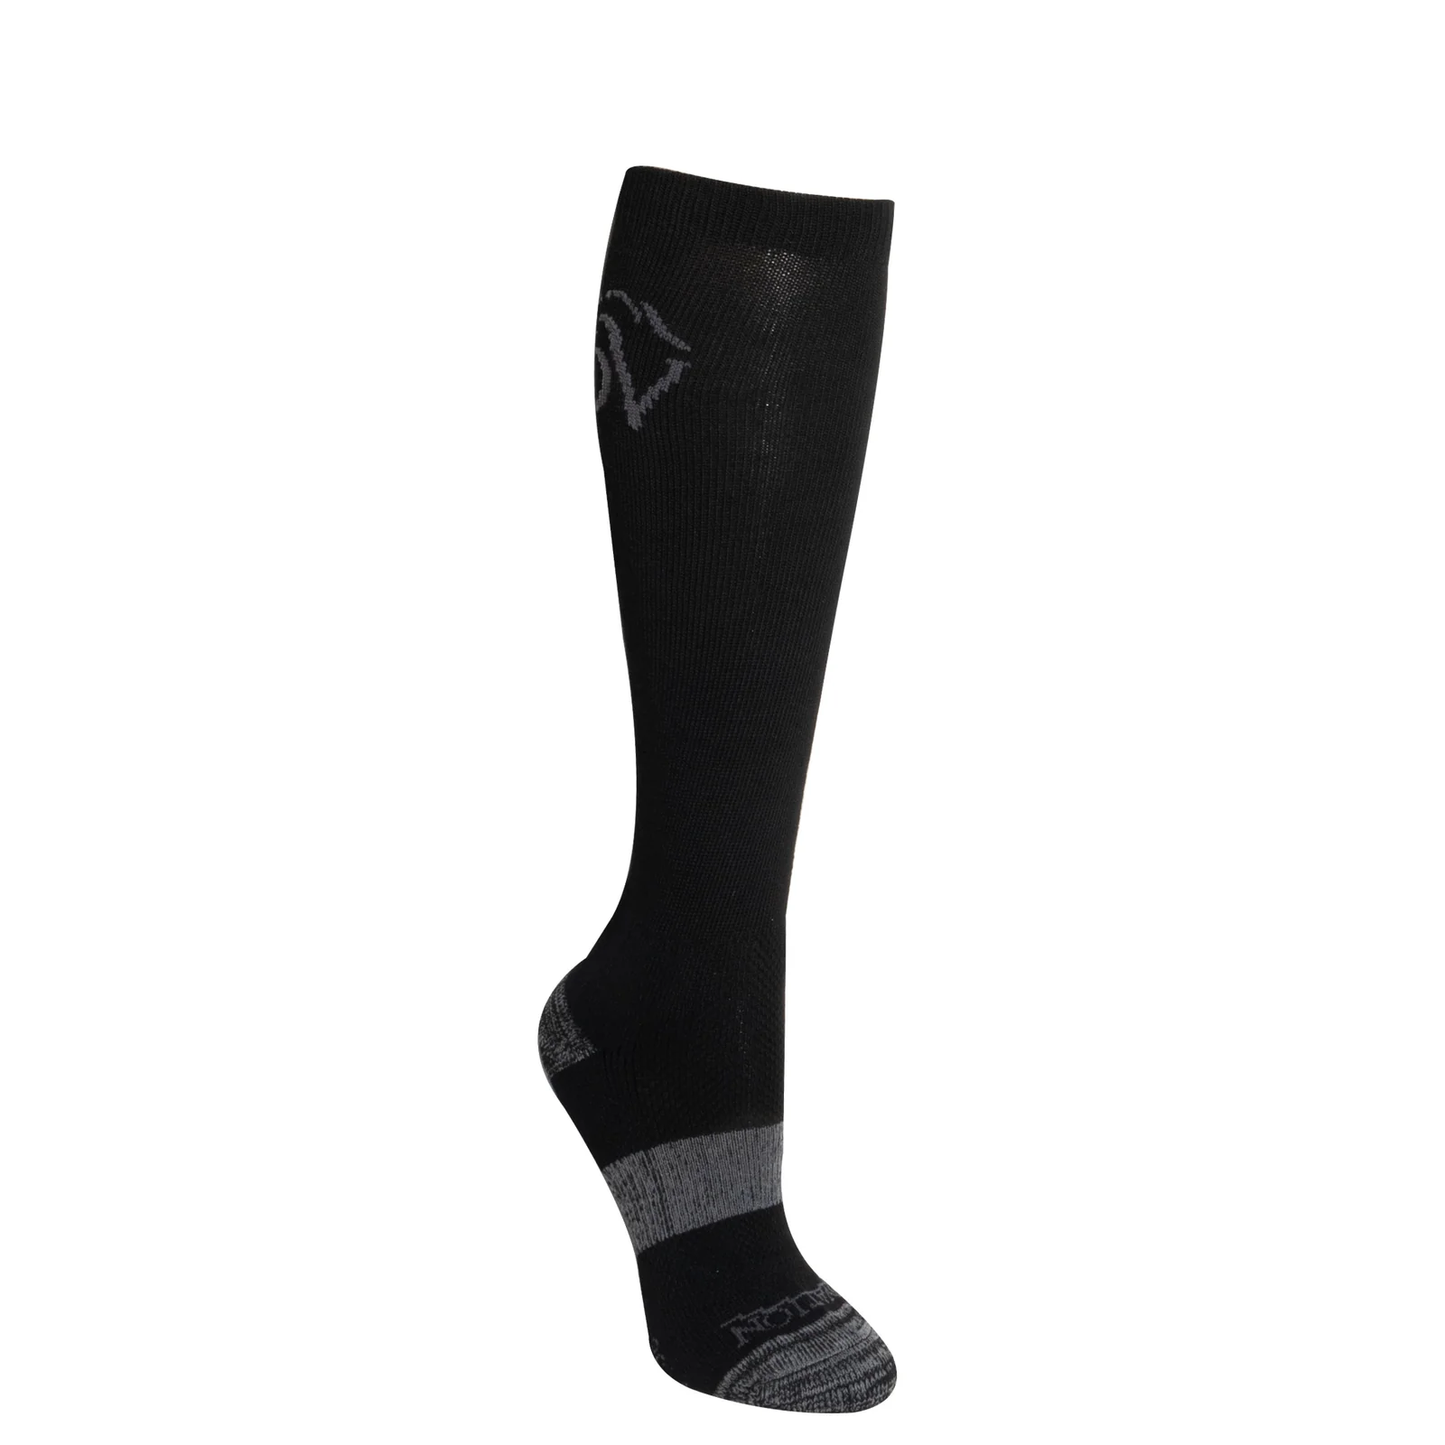 Ovation World's best boot socks